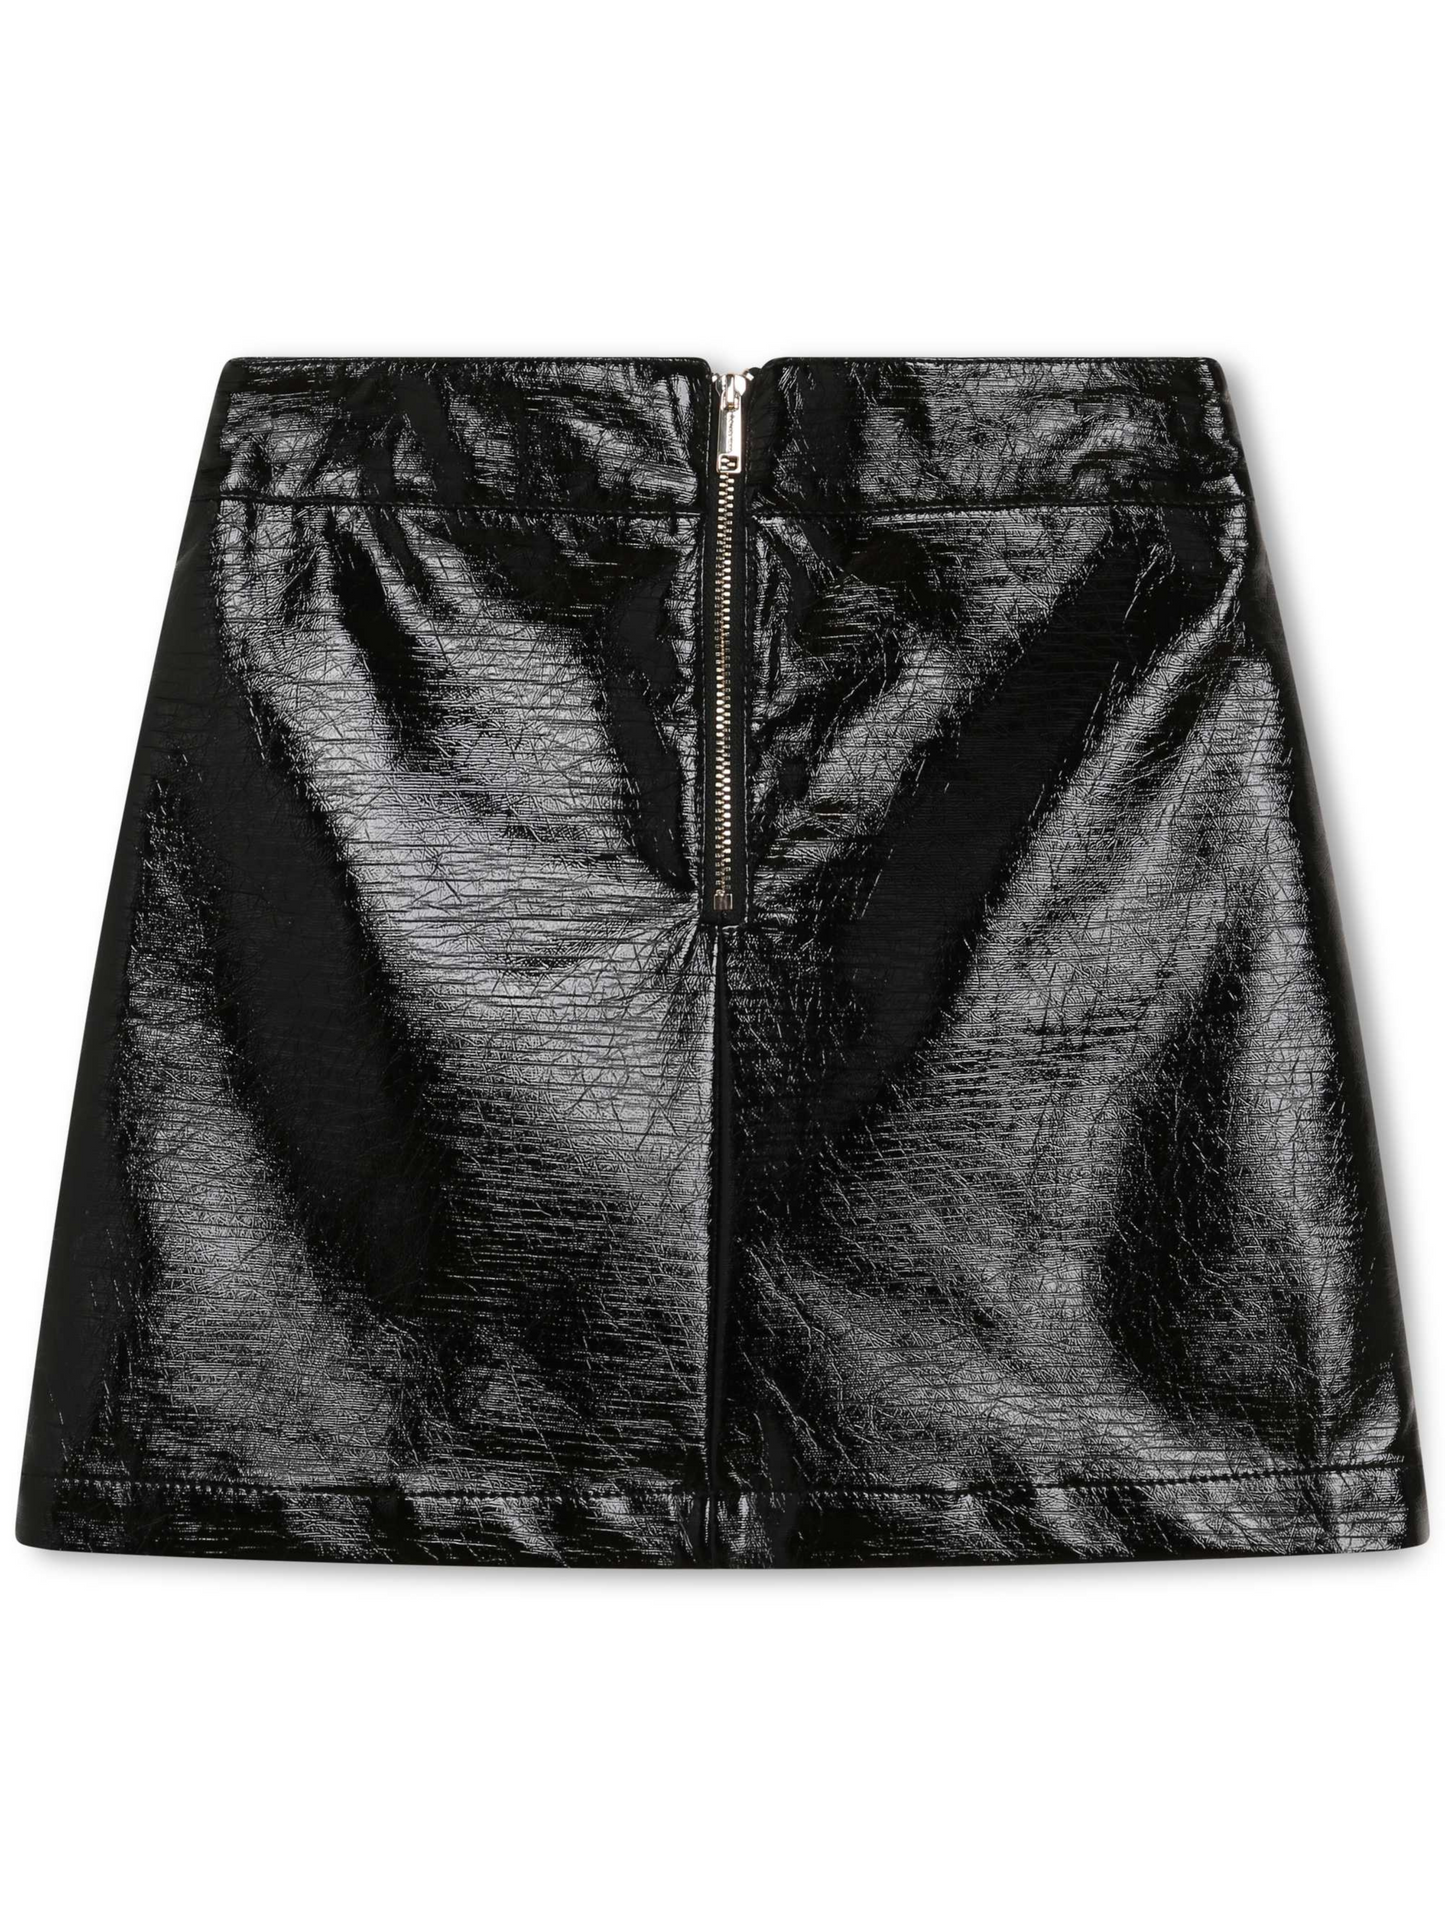 Michael Kors Black Pleather Skirt _R13131-09